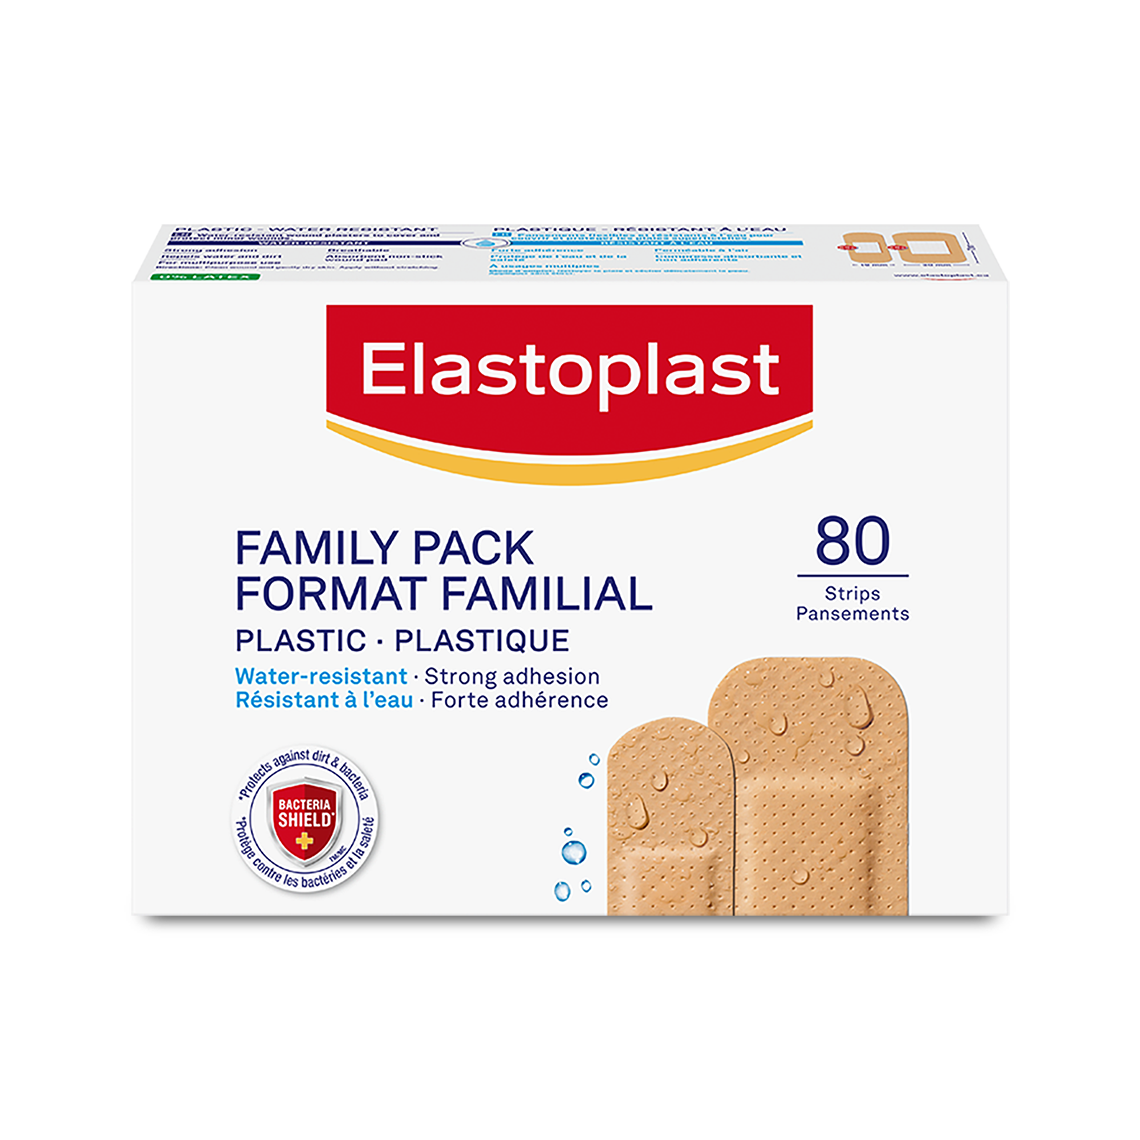 EP_Rebrand_Product_1380x1140_Plastic_FamilyPack_80Strips